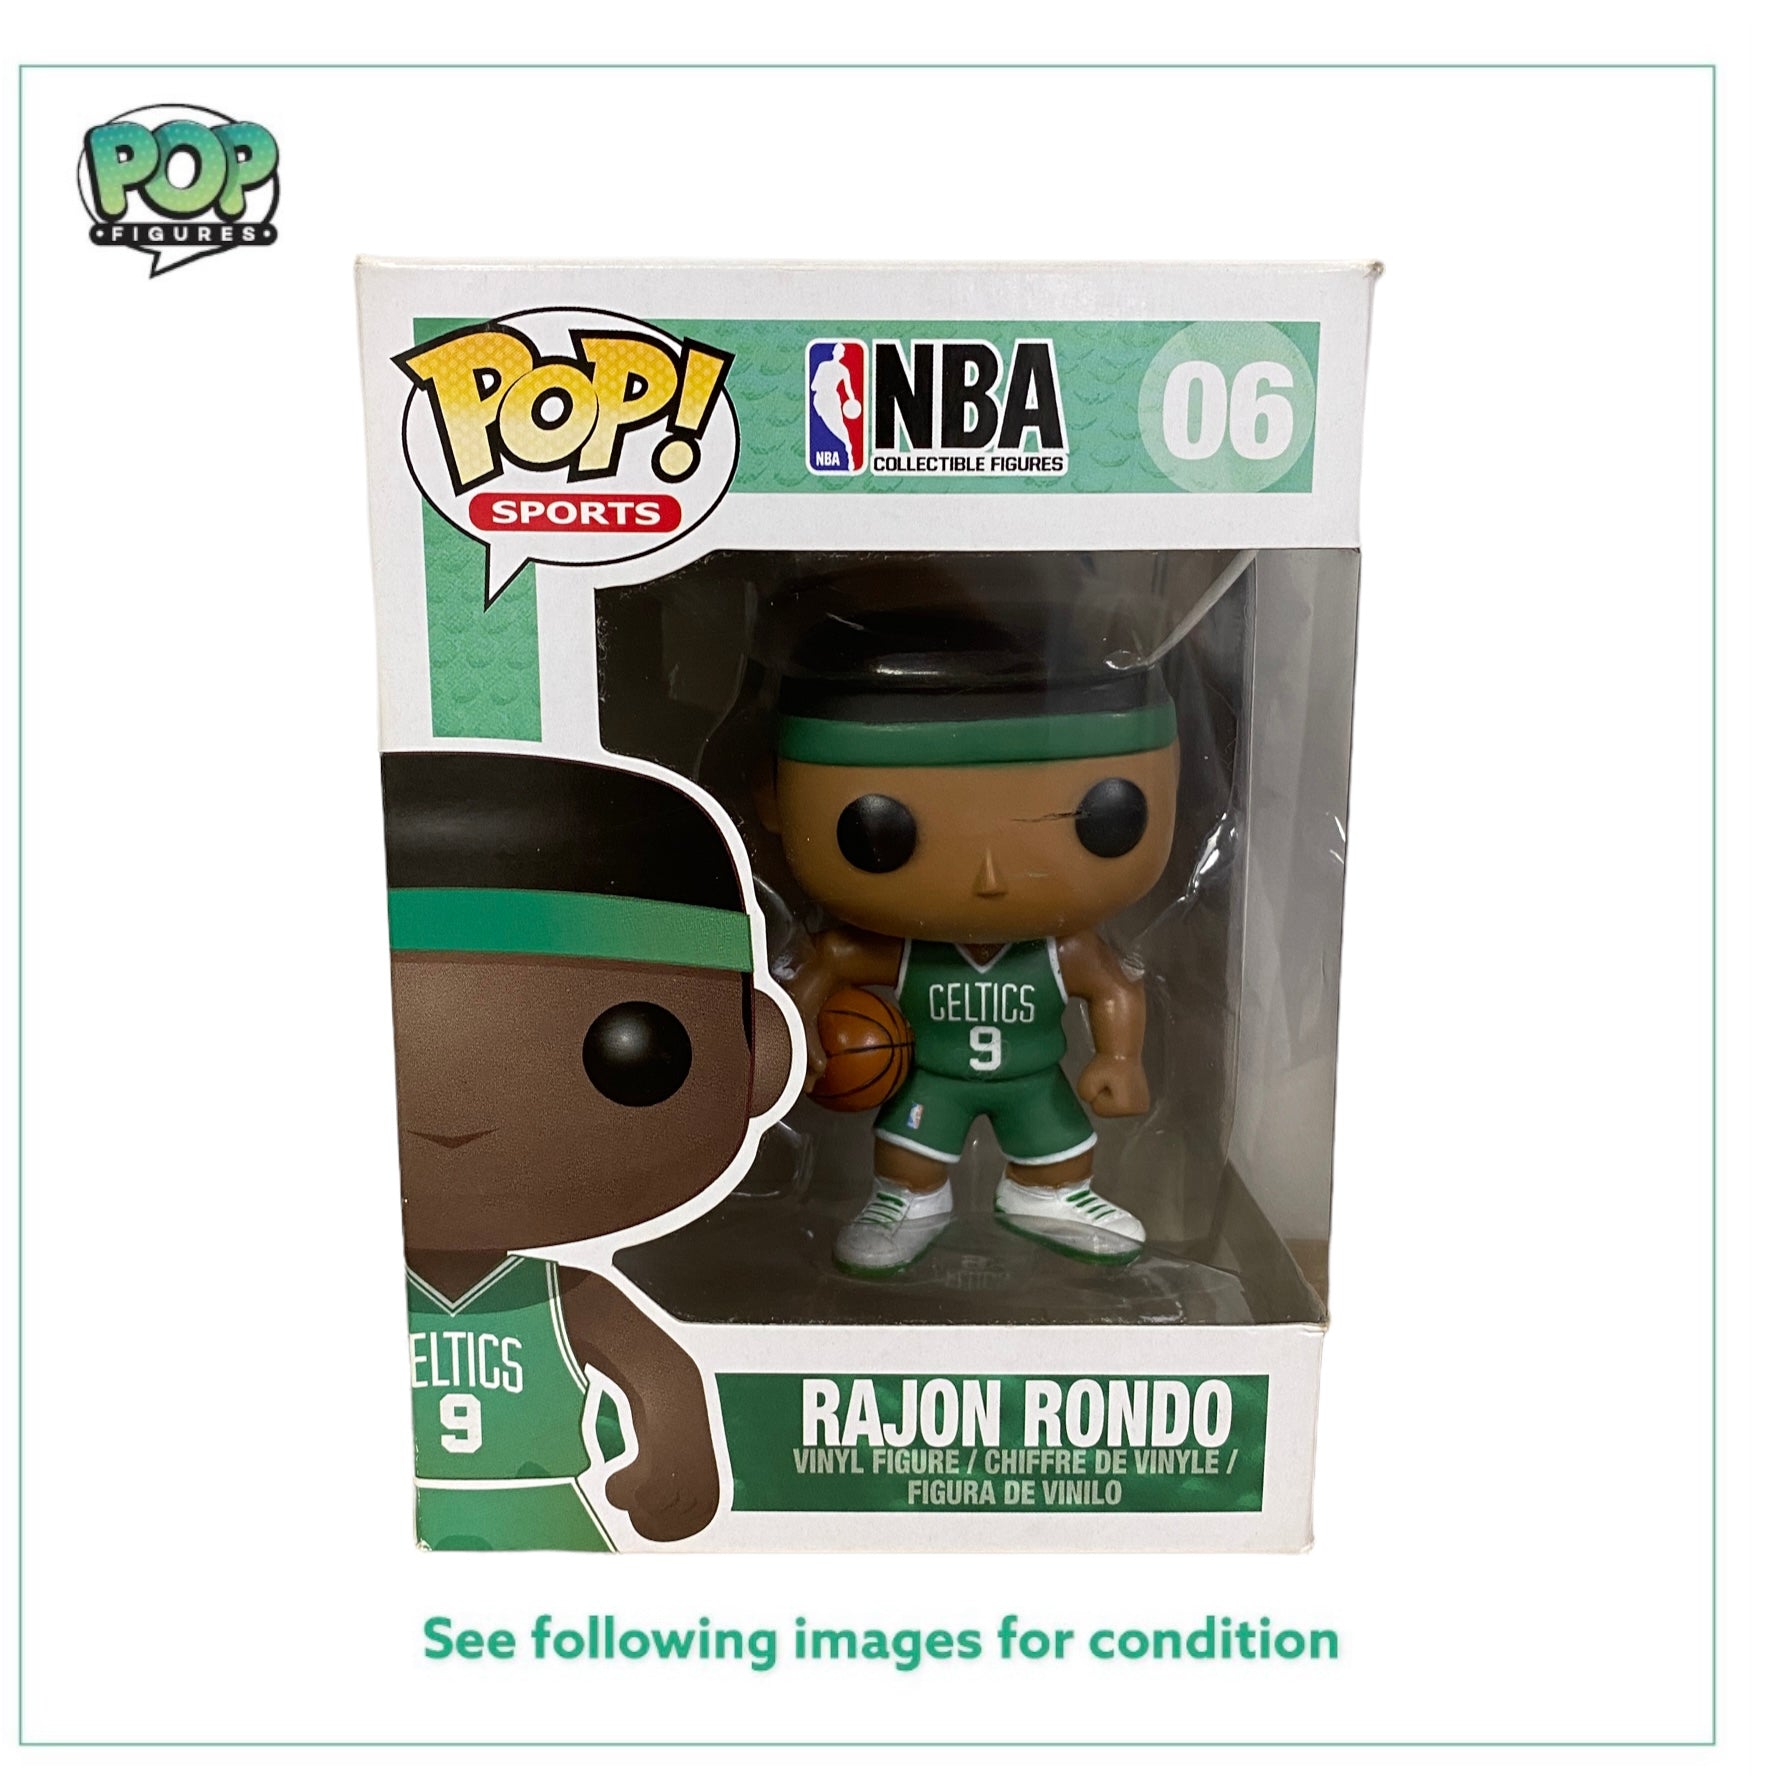 Rajon Rondo #06 Funko Pop! - NBA - 2012 Pop! - Mindstyle - Condition 8/10